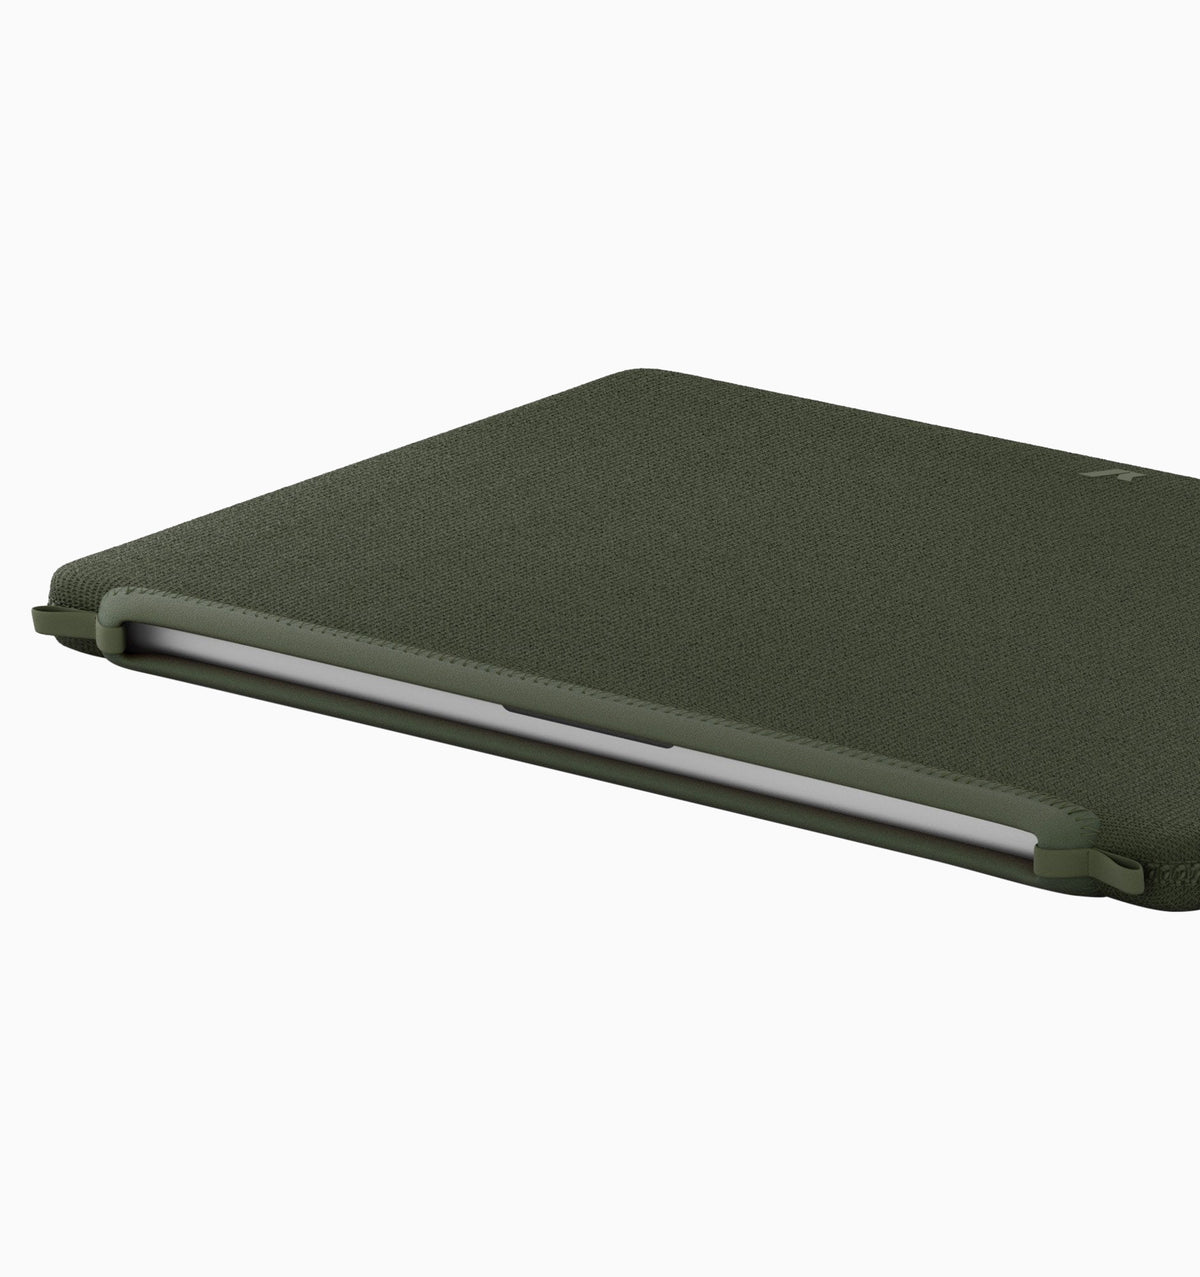 Rushfaster Laptop Sleeve For 14" MacBook Pro - Green